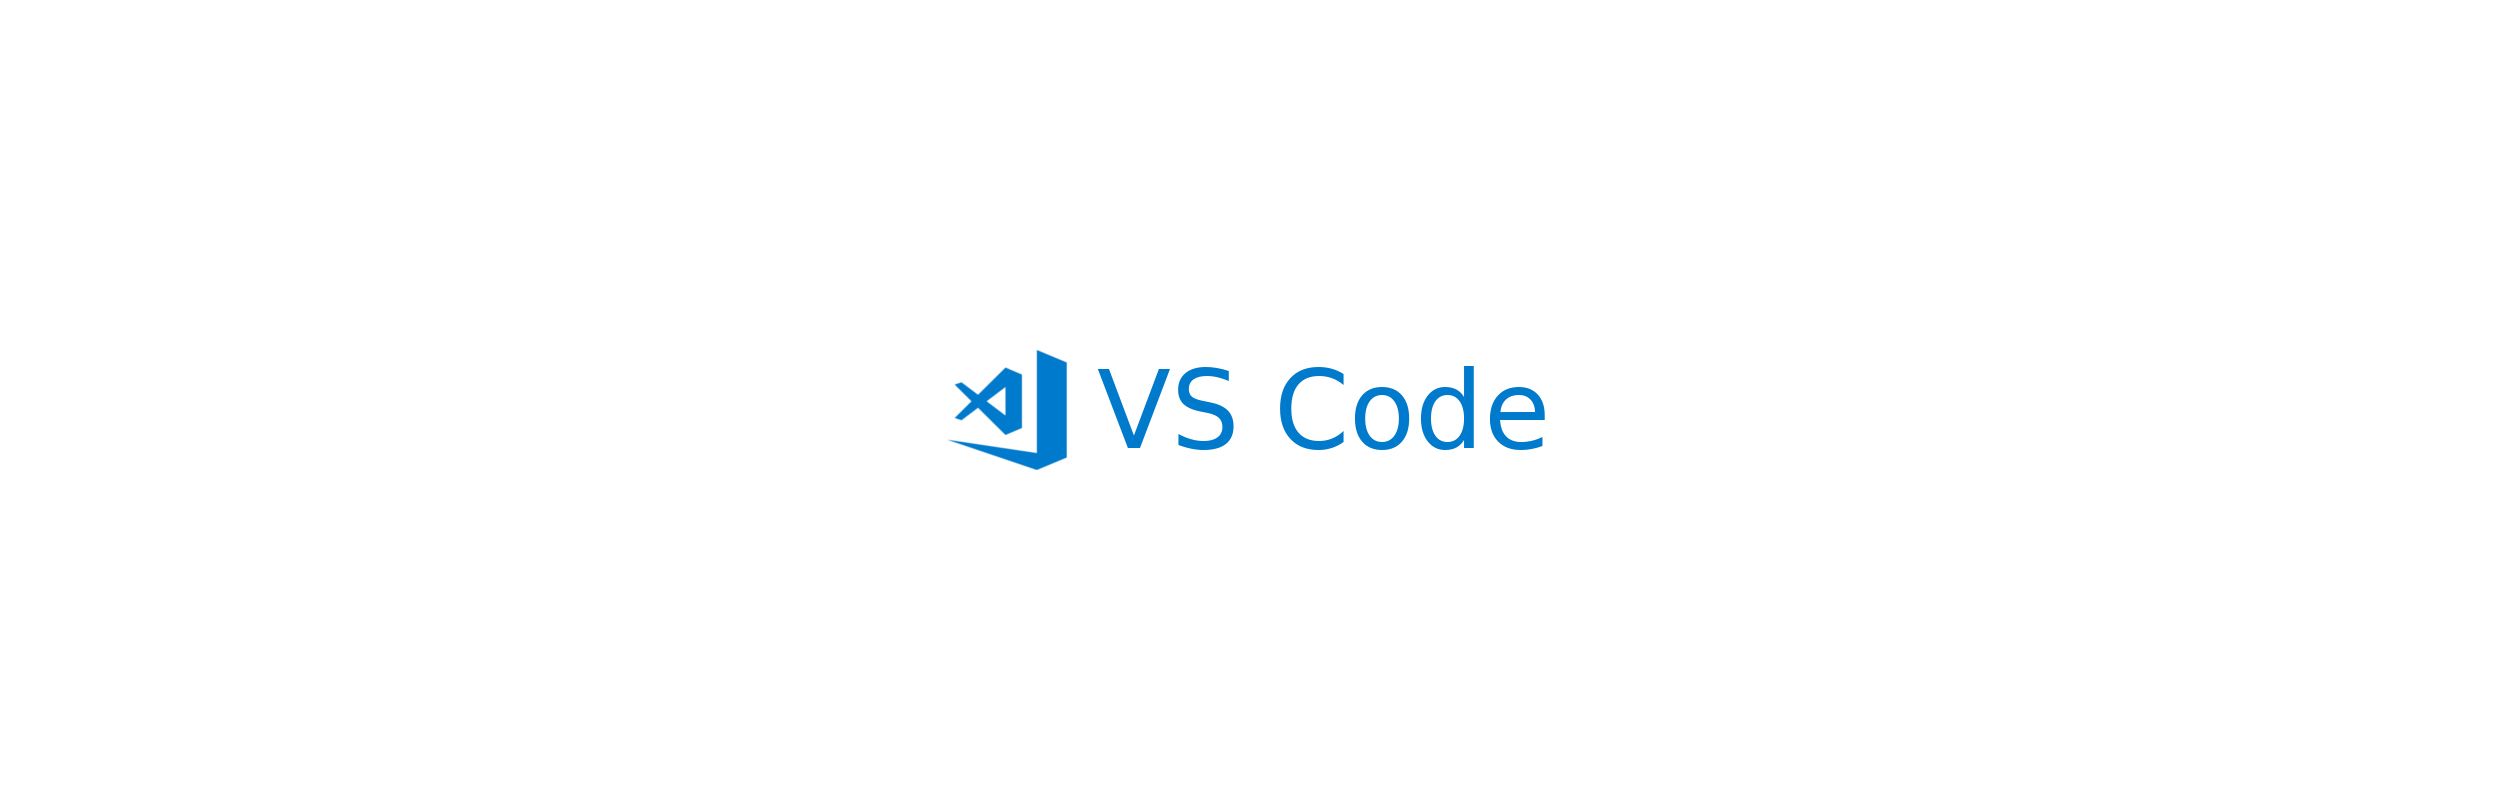 7 Must Use VS Code Extensions - DEV Community